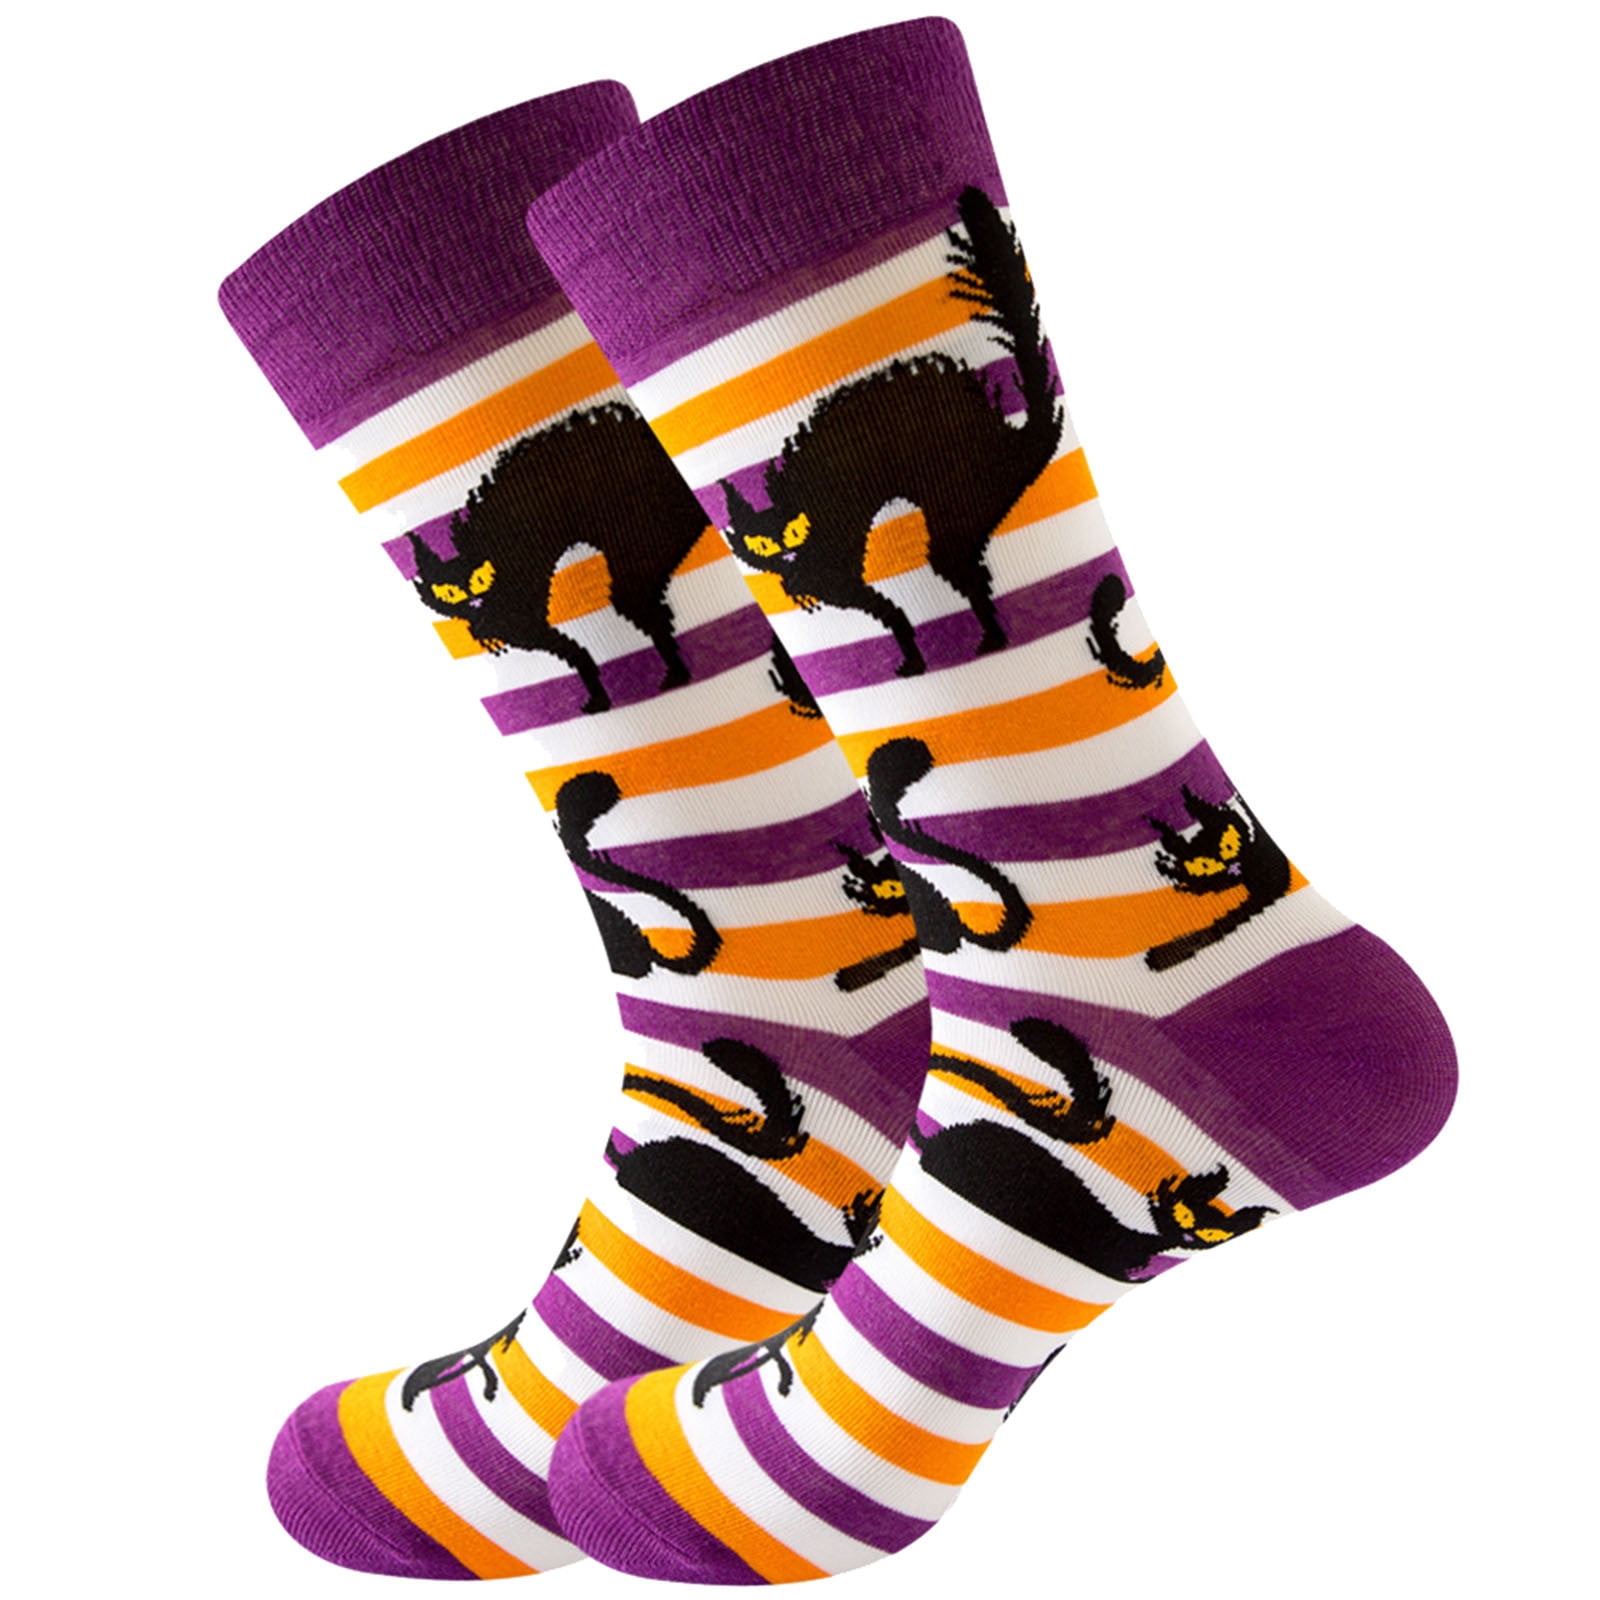 2 packs* Workout Socks Women Fun Halloween Socks For Women Funny Halloween  Gifts For Female Novelty Crew Cotton Sock 